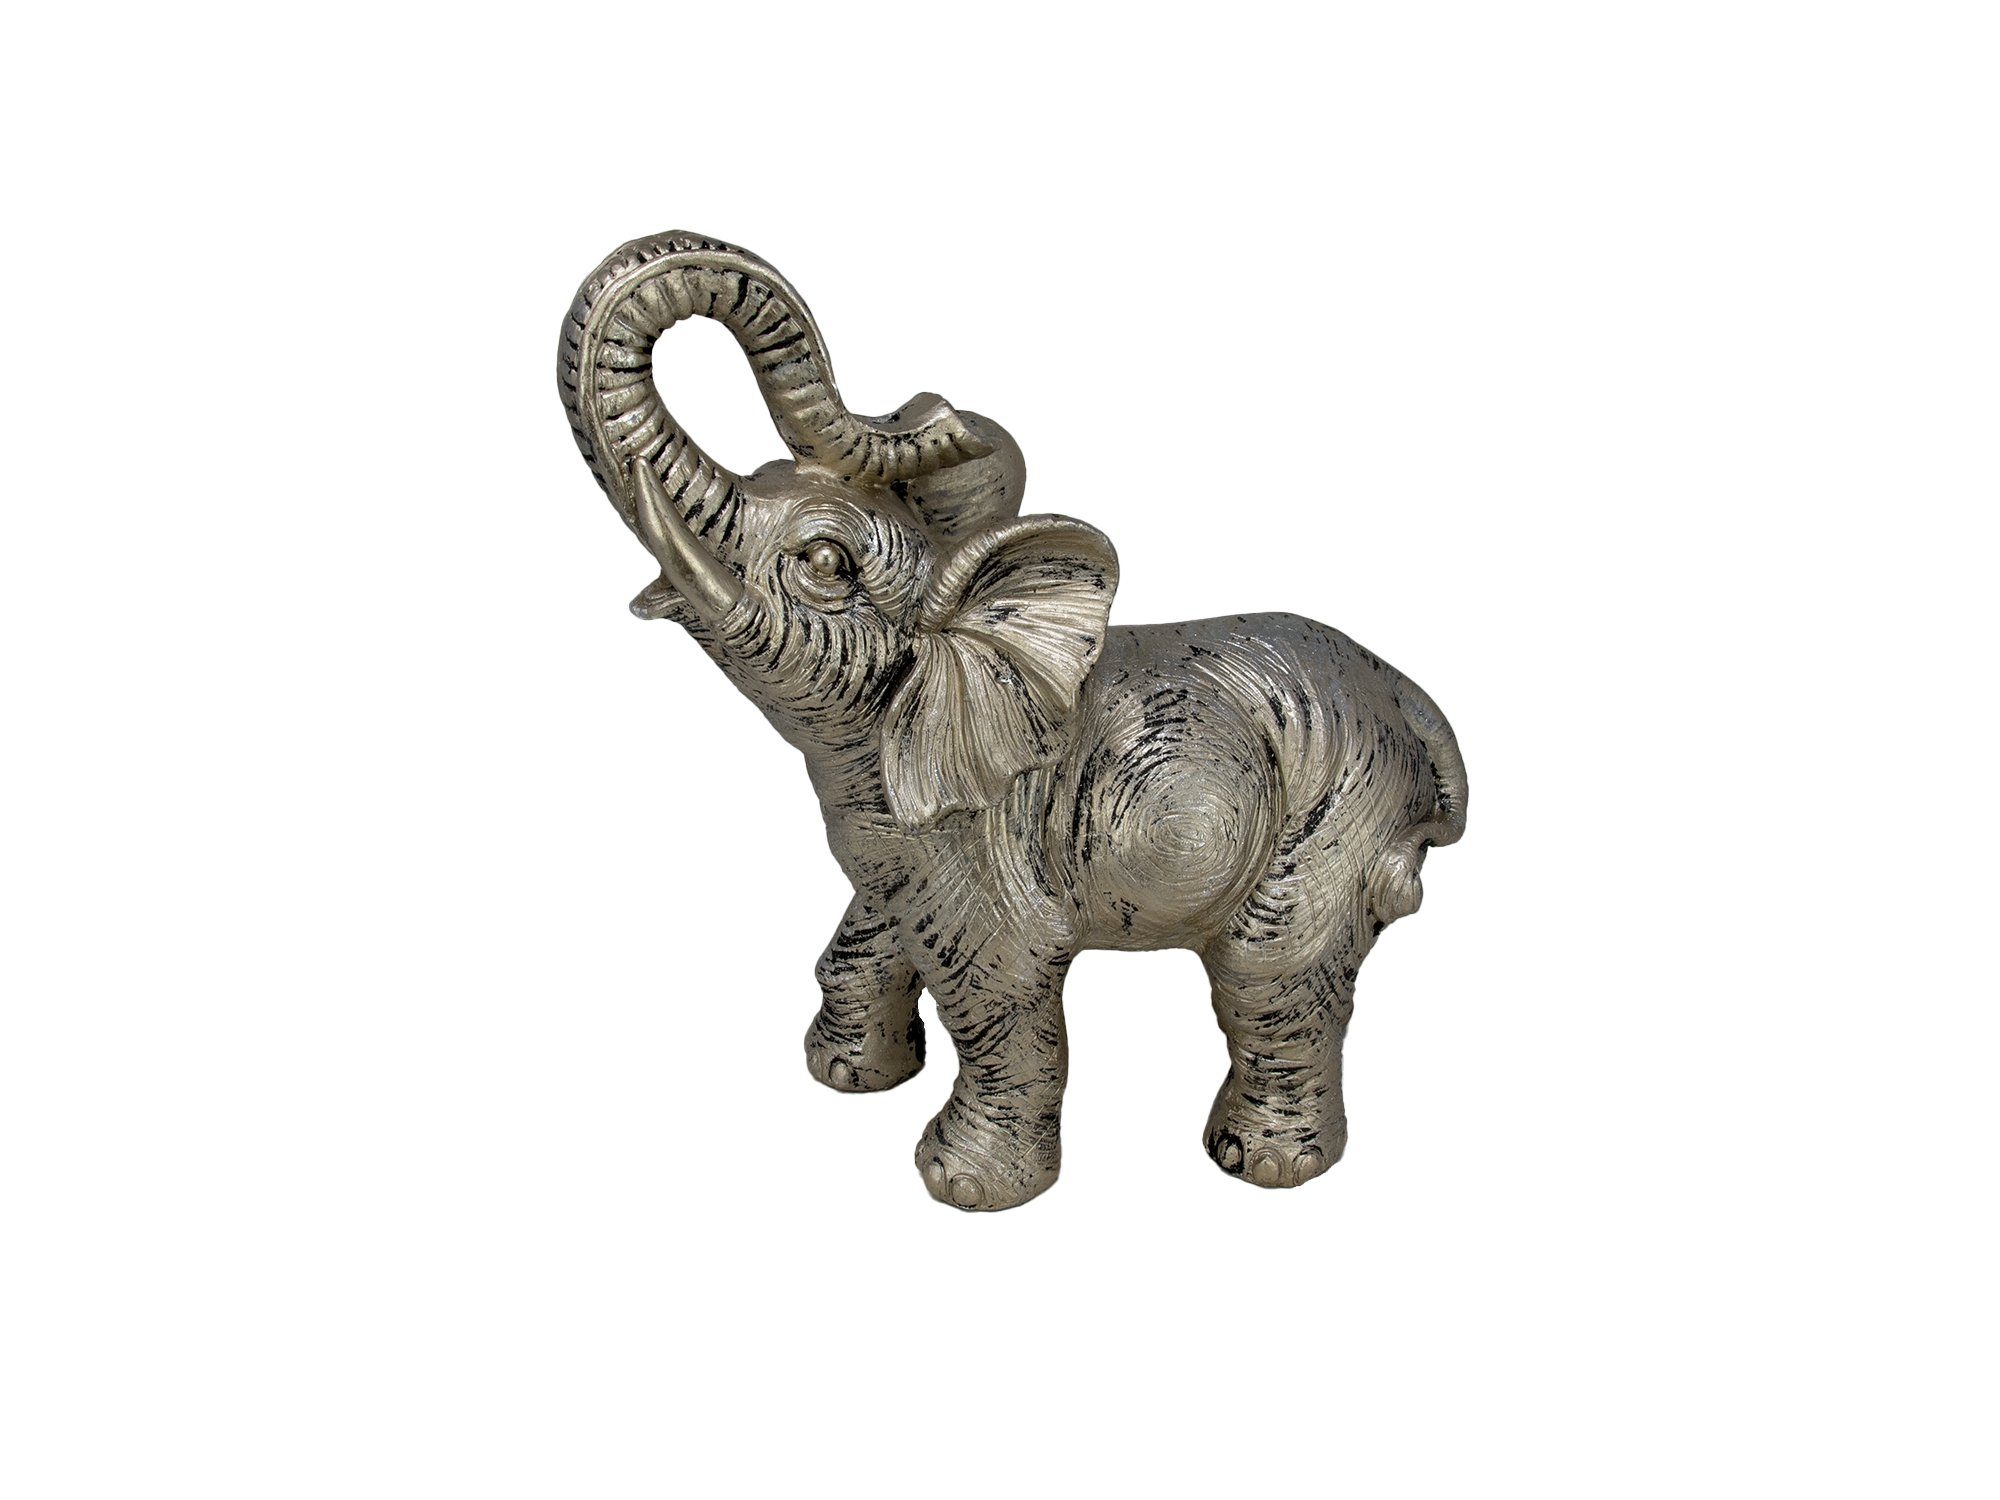 Klaus Skulptur stehend, cm Elefant silber, ca. 38,5